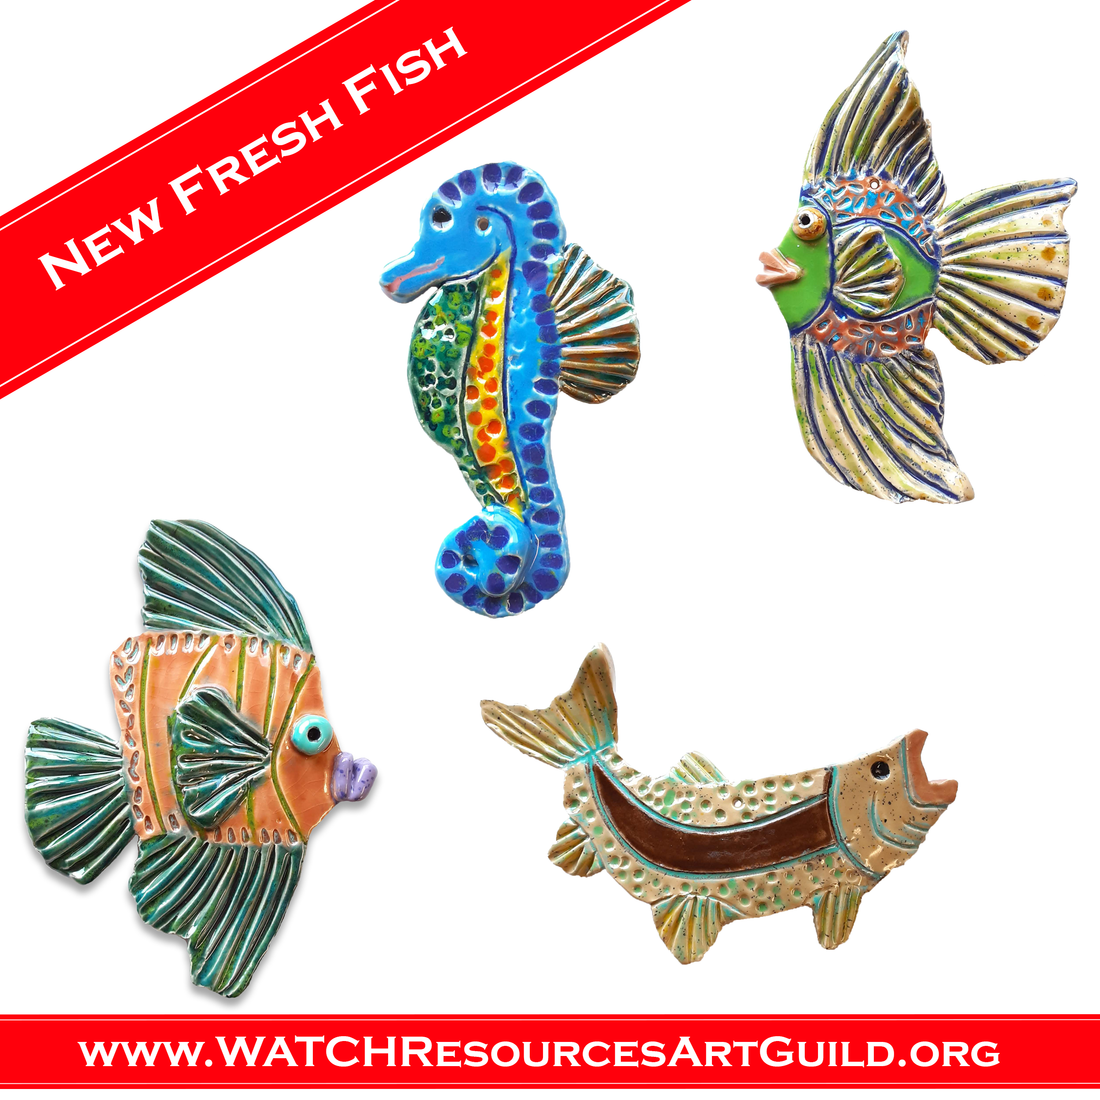 WATCH Resources Art Guild - Fresh Fish March 2021